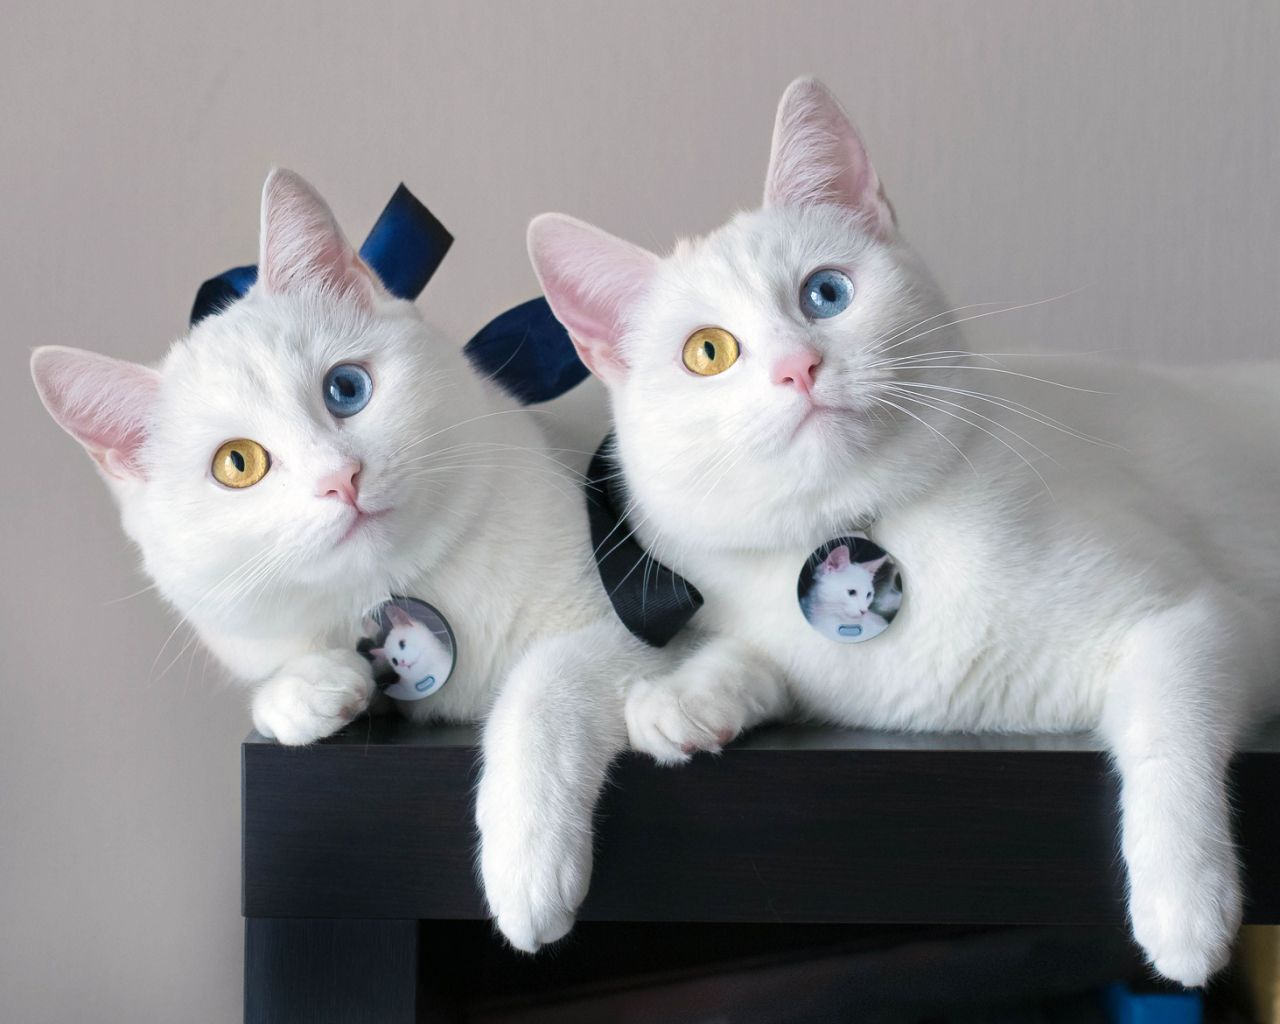 PHOTOS: Adorable twin cats showcase their fascinating eye colors